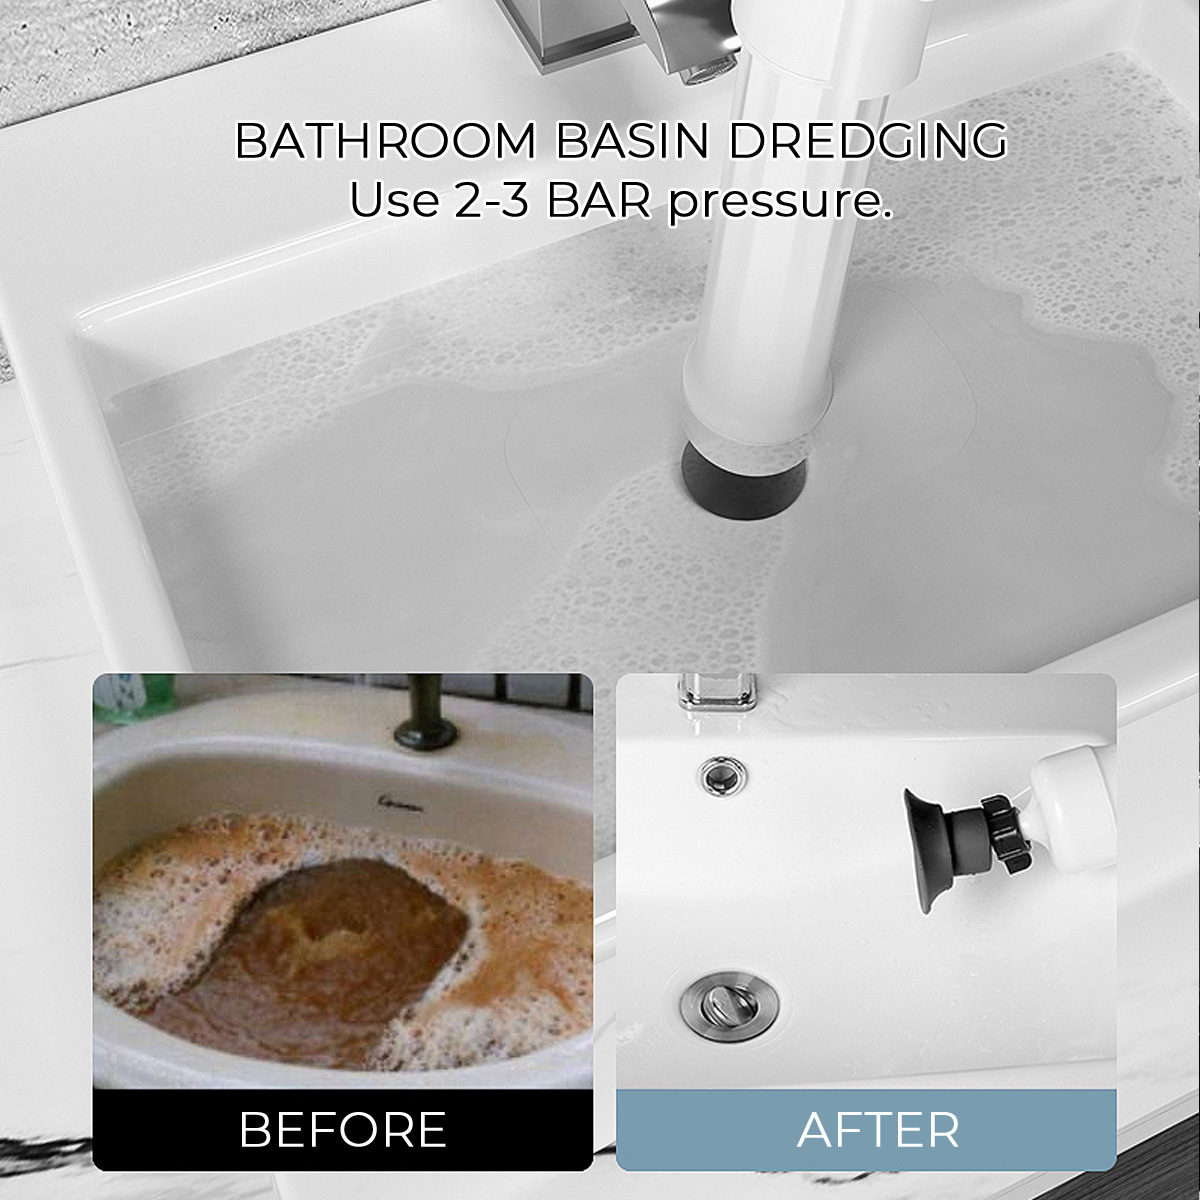 High-Pressure-Toilet-Plunger-Dredge-Toilet-Device-Dredging-Bathroom-Floor-Drain-1626531